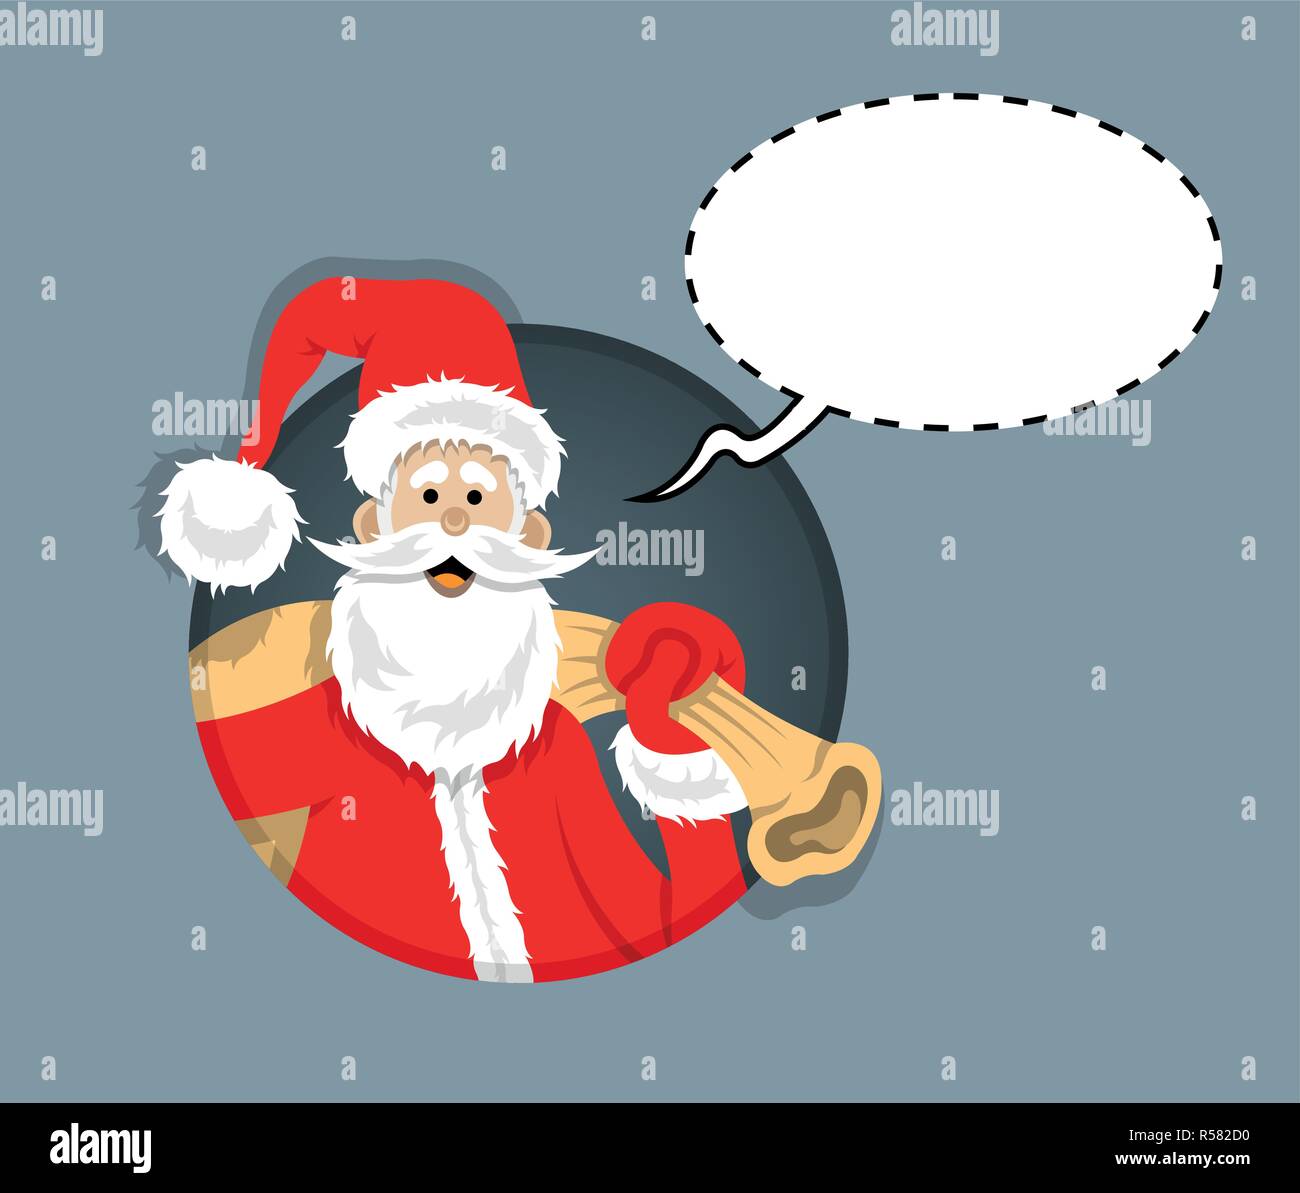 Santa Claus Cartoon Inside Circle With Whisper Bubble All